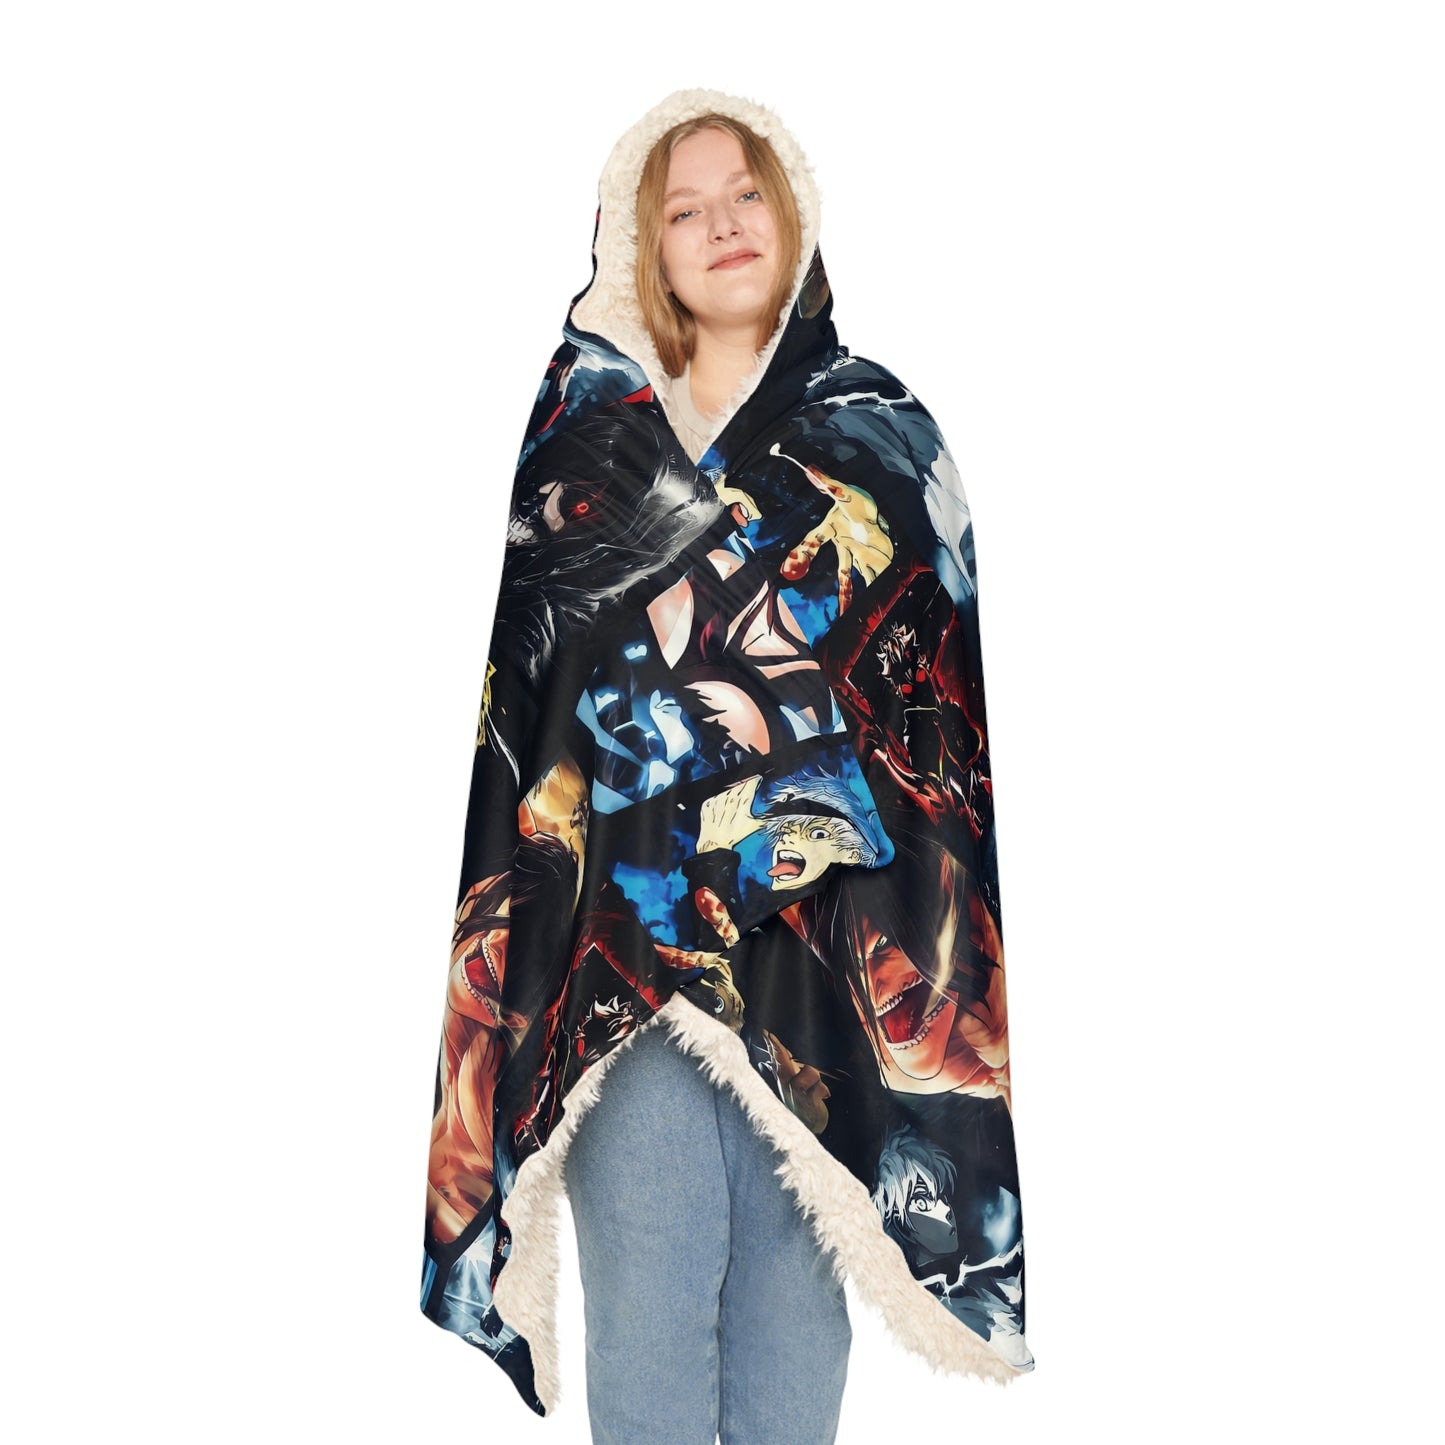 Anime Hero Montage Snuggle Blanket